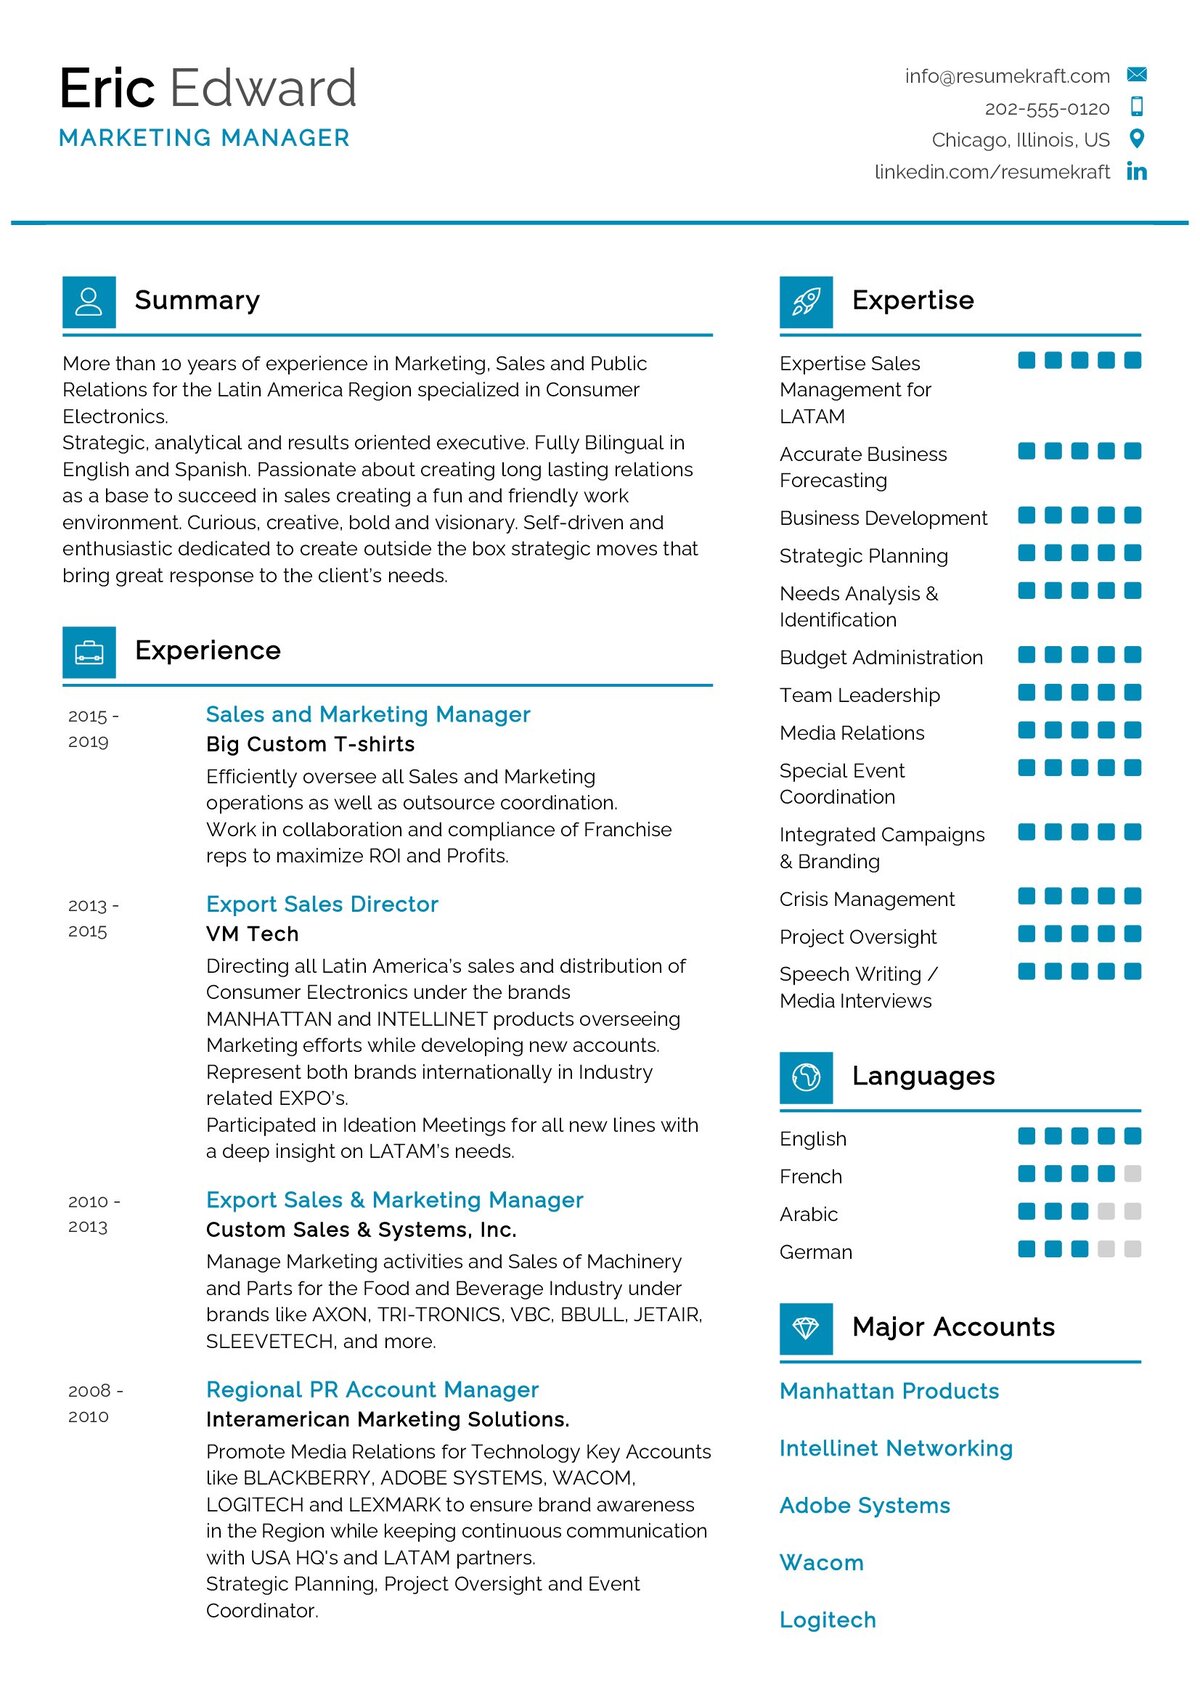 best resume format for marketing manager